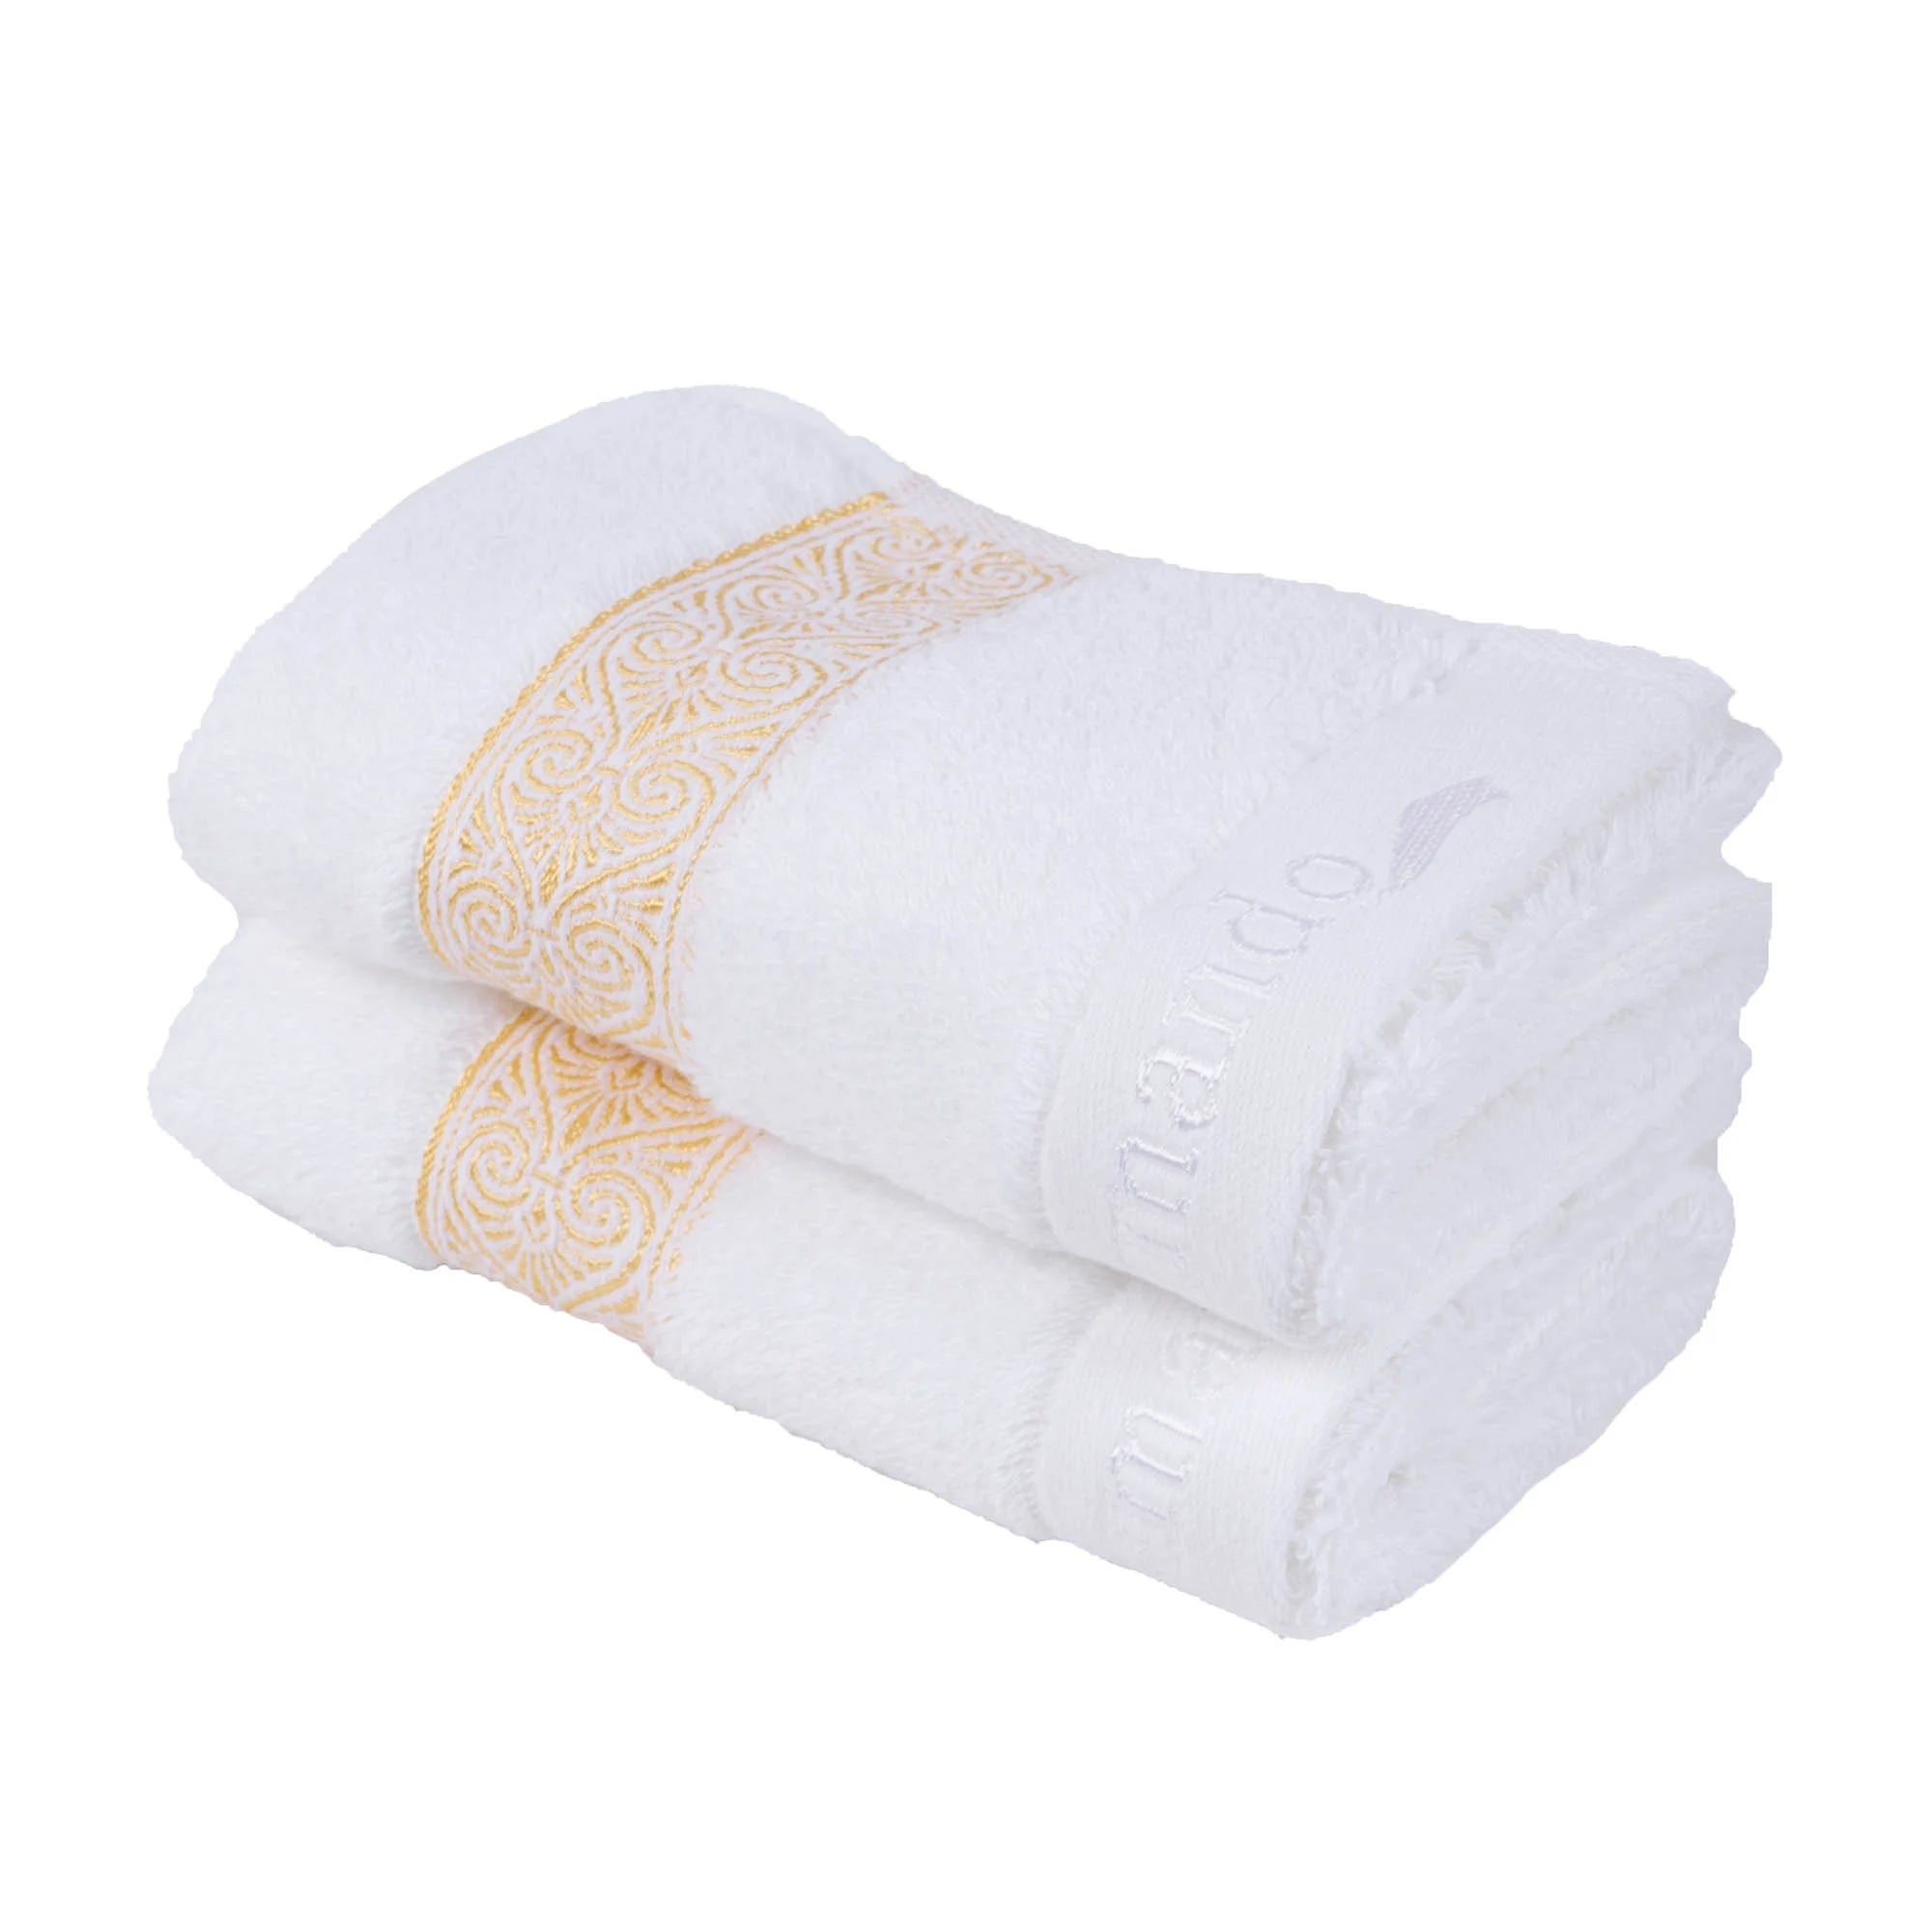 Luxury Guest Towel Set of 2